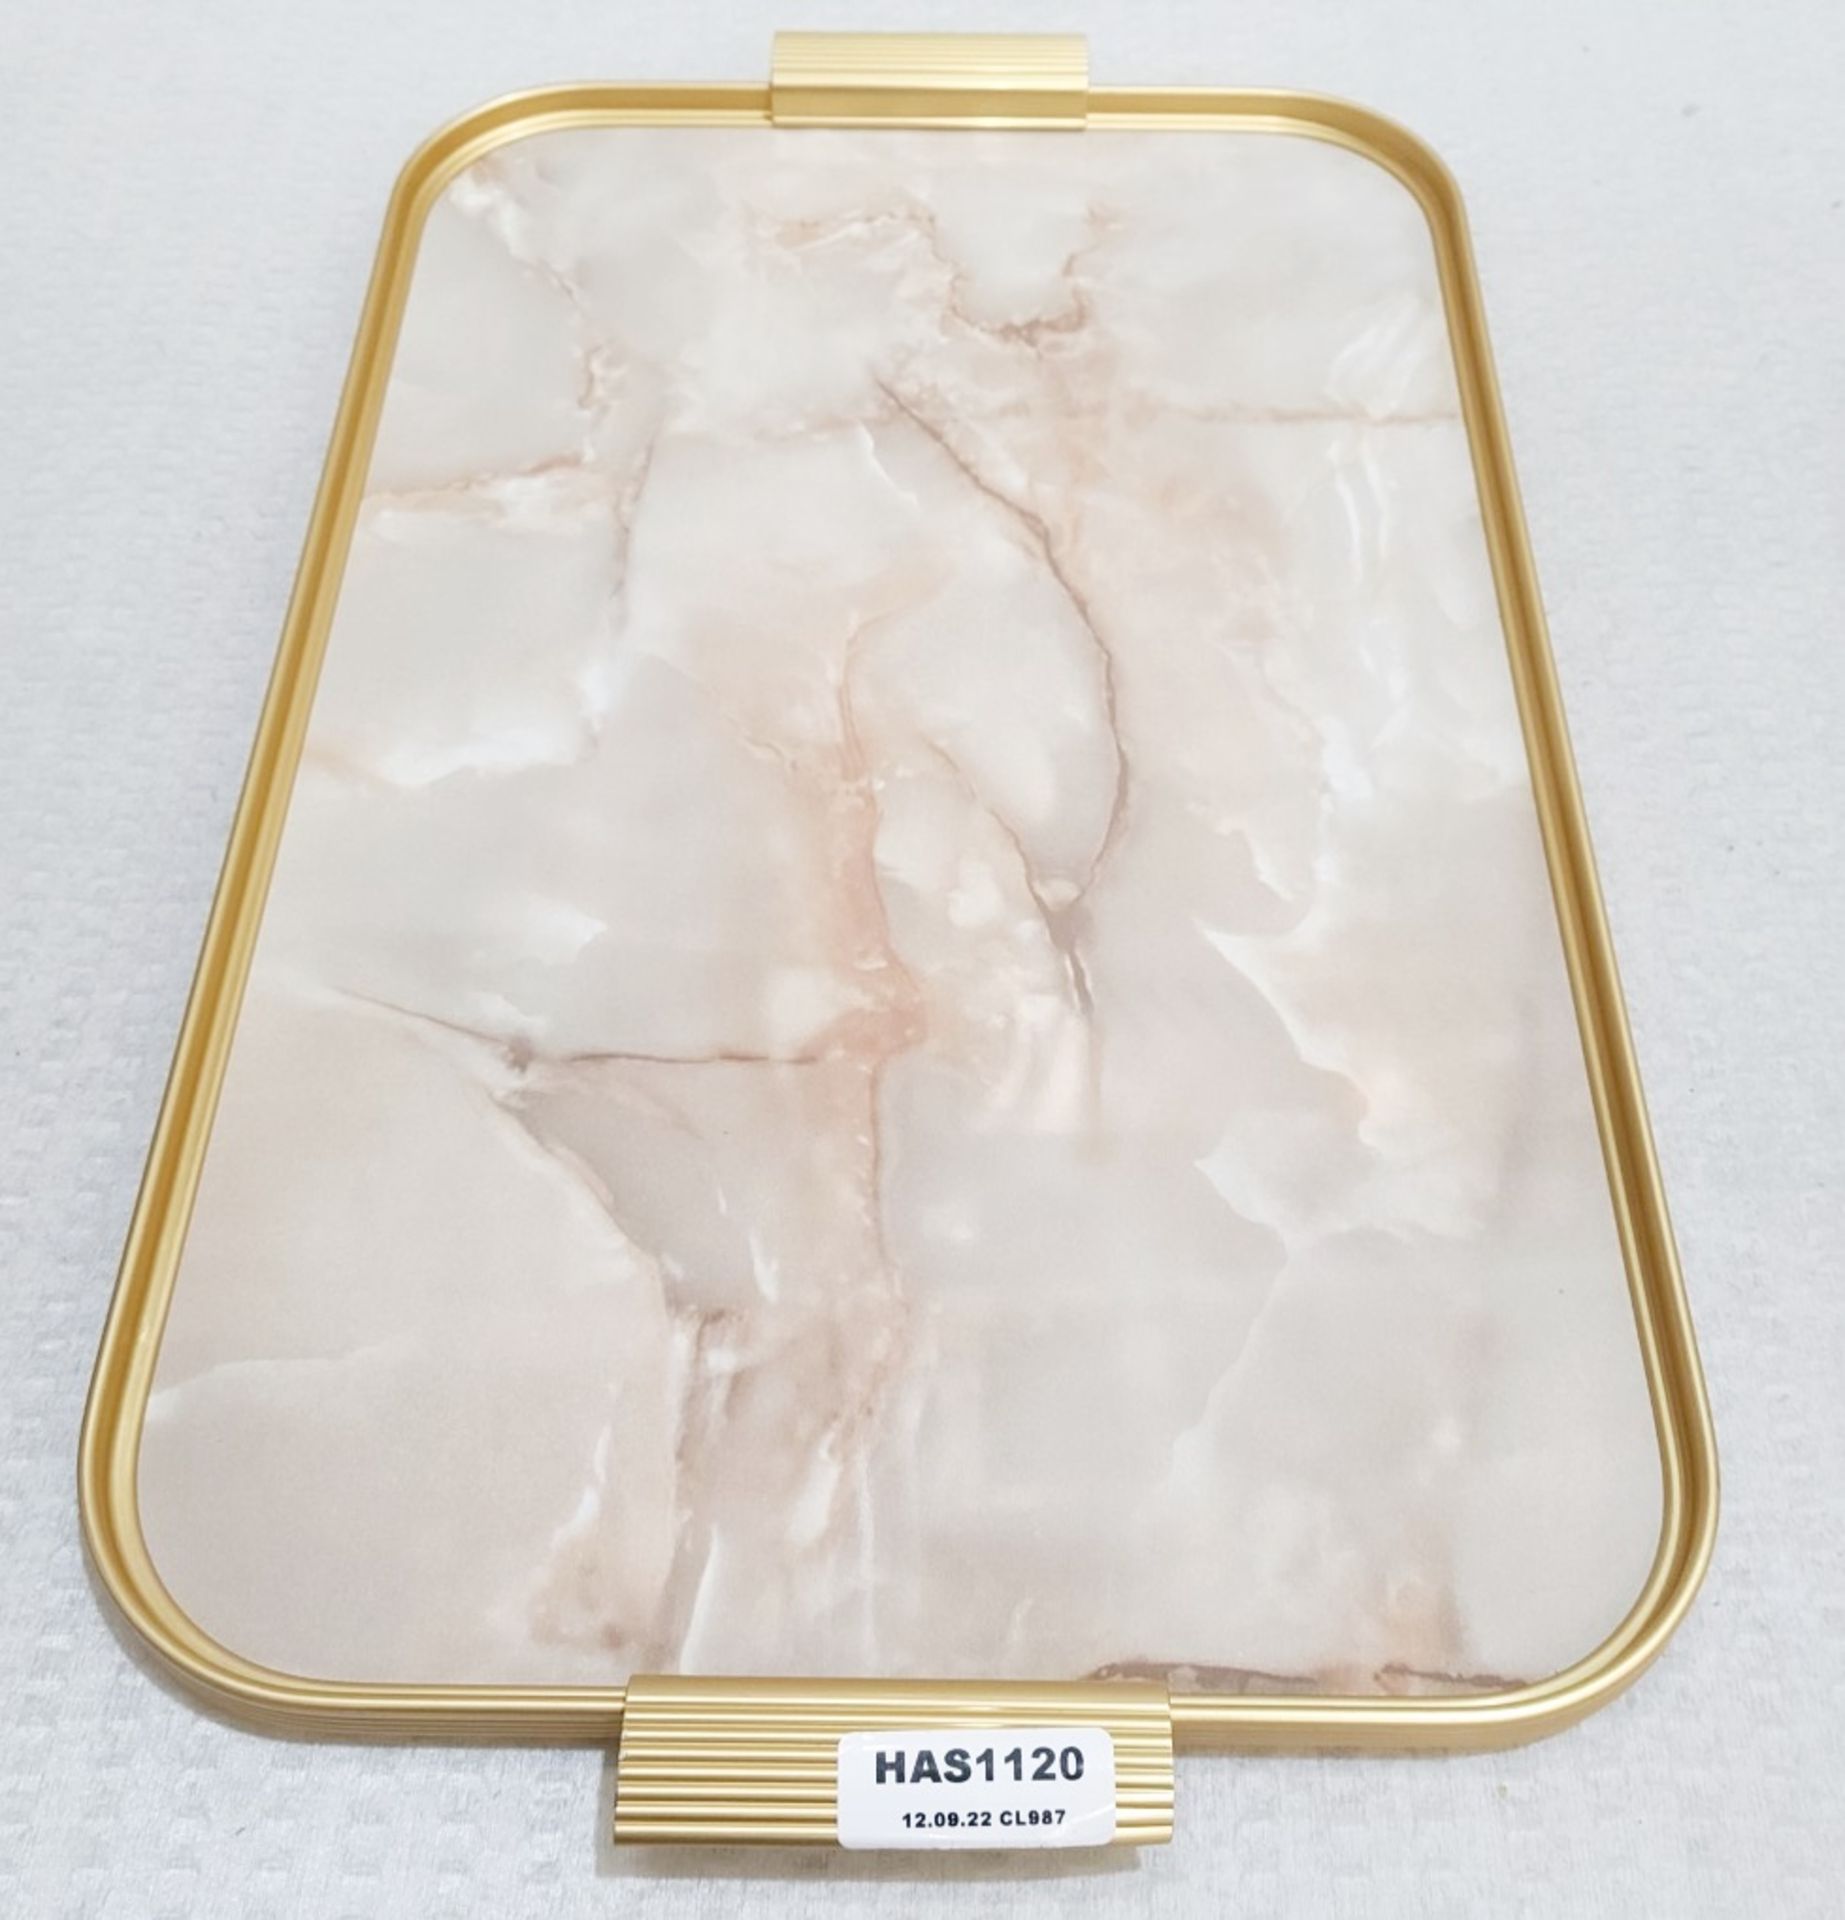 1 x KAYMET Ribbed Tray Onyx Marble (51cm) - Original Price £149.00 - Image 2 of 4